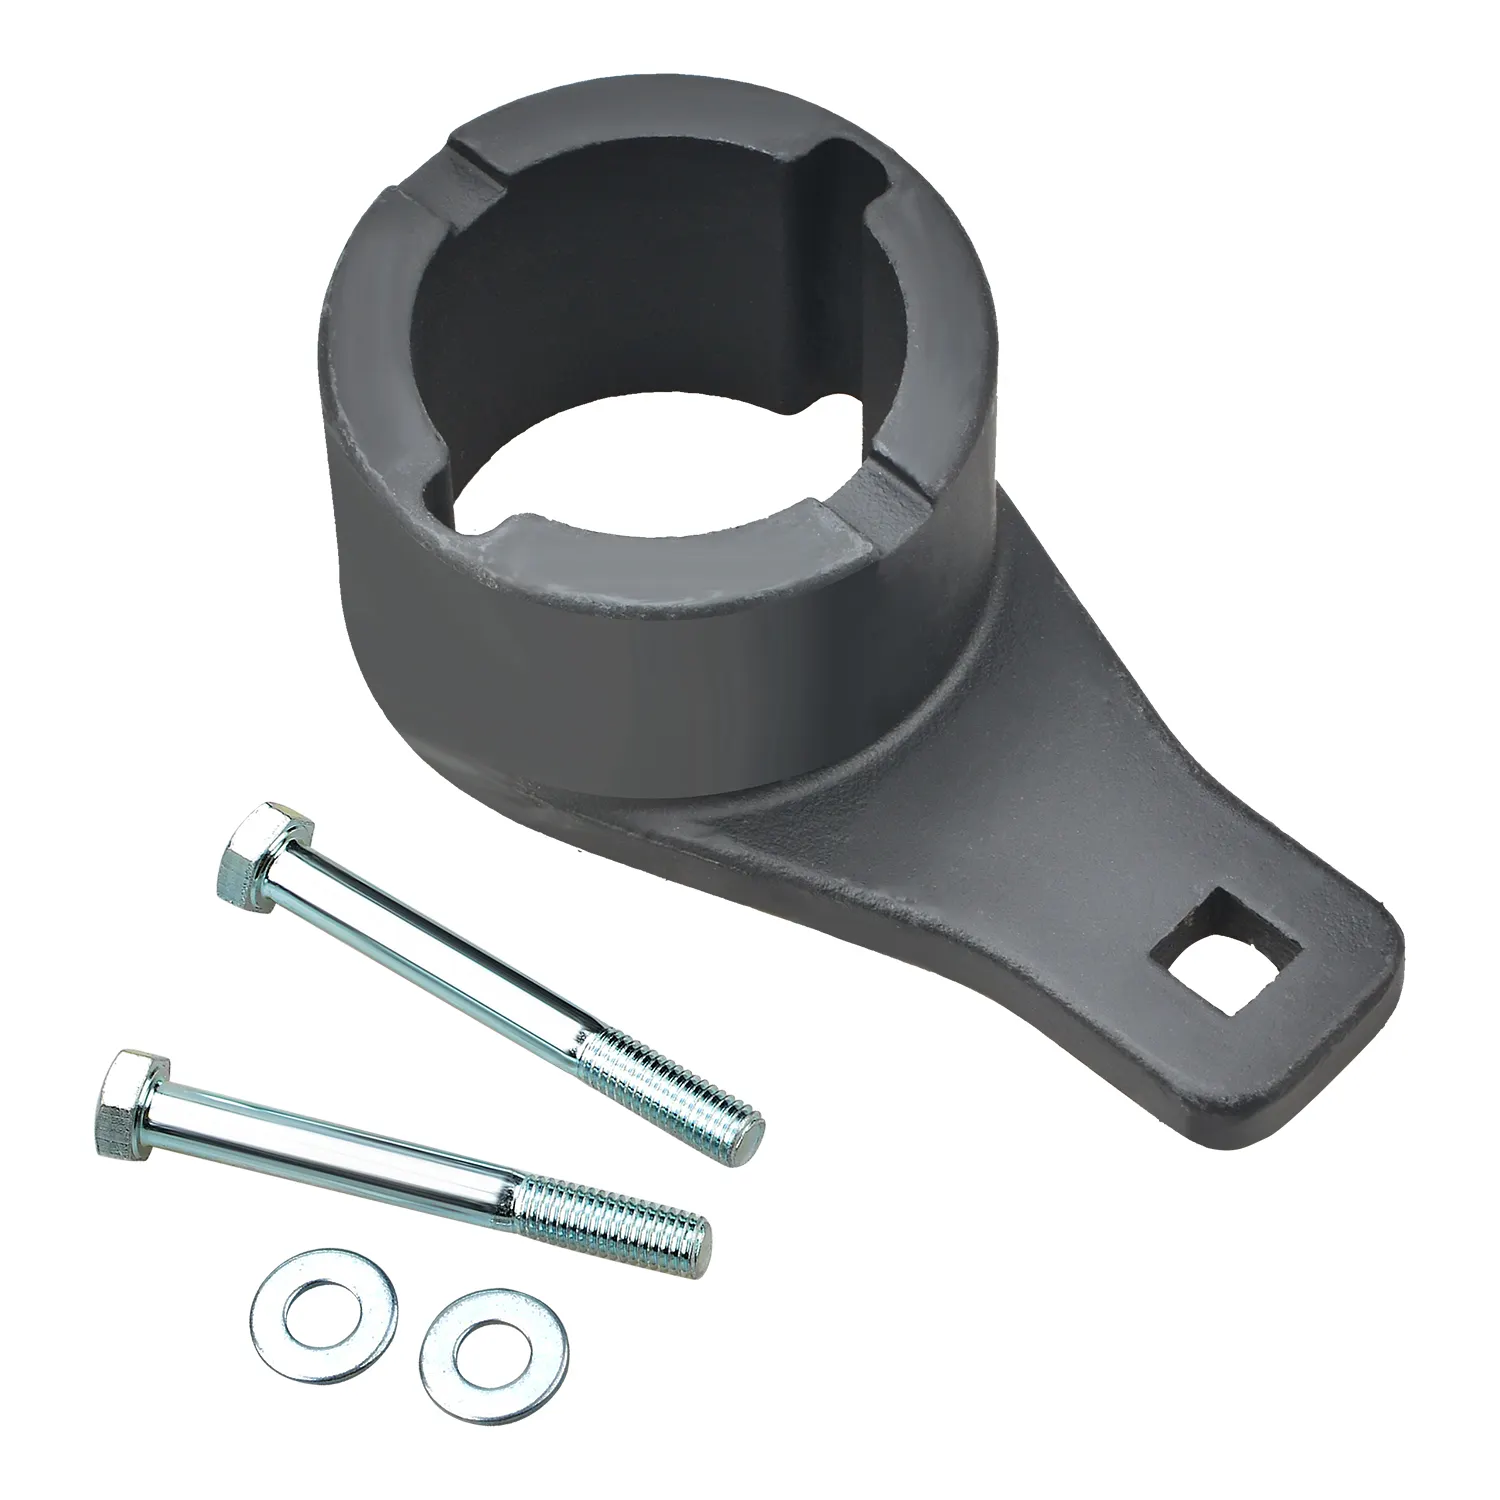 Diesel Harmonic Damper Pulley Crankshaft Crank Belt Holding Holder Removal Wrench Tool For Toyota Lexus Engines